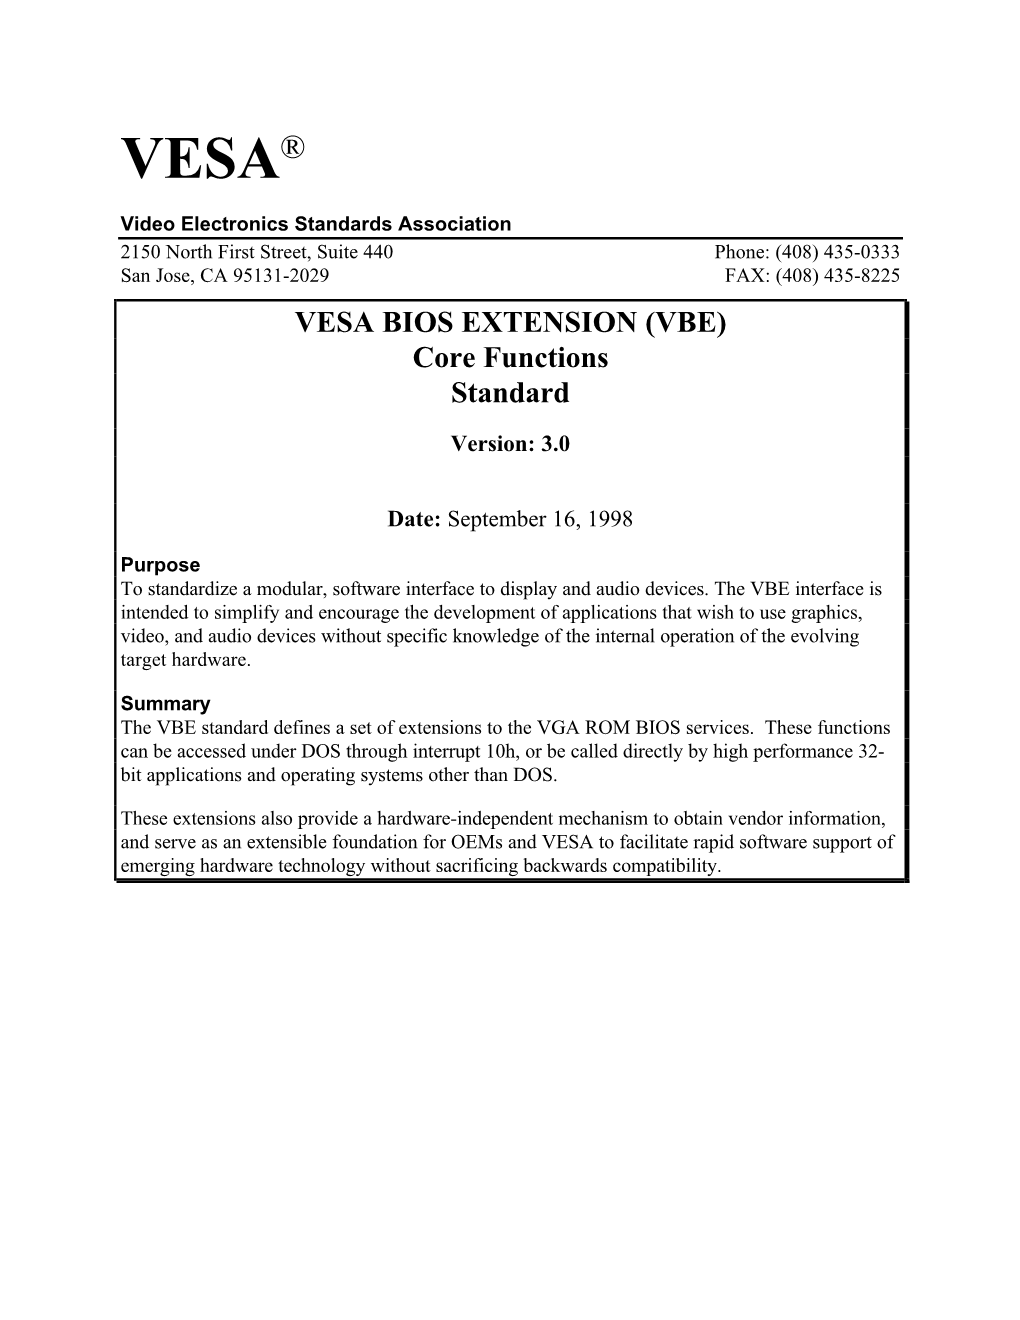 VESA BIOS EXTENSION (VBE) Core Functions Standard